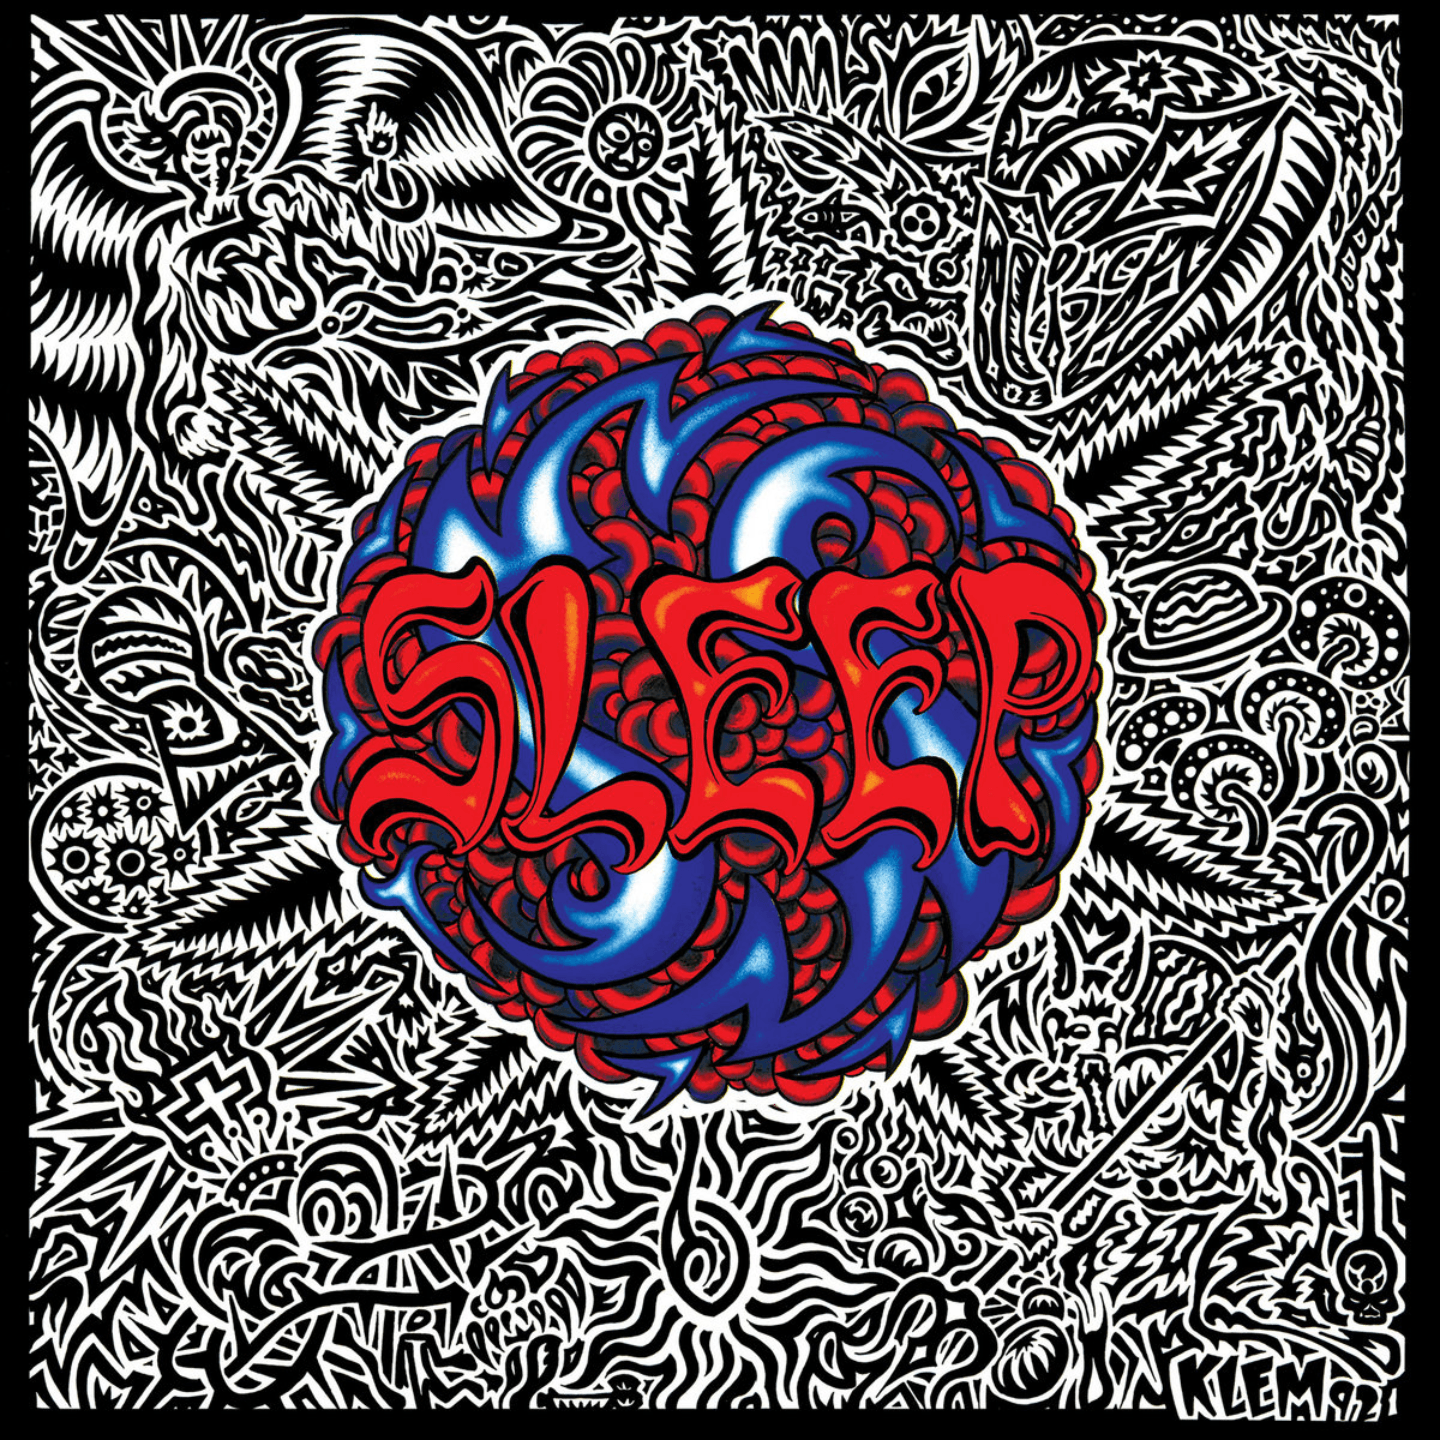 SLEEP - Sleeps Holy Mountain LP